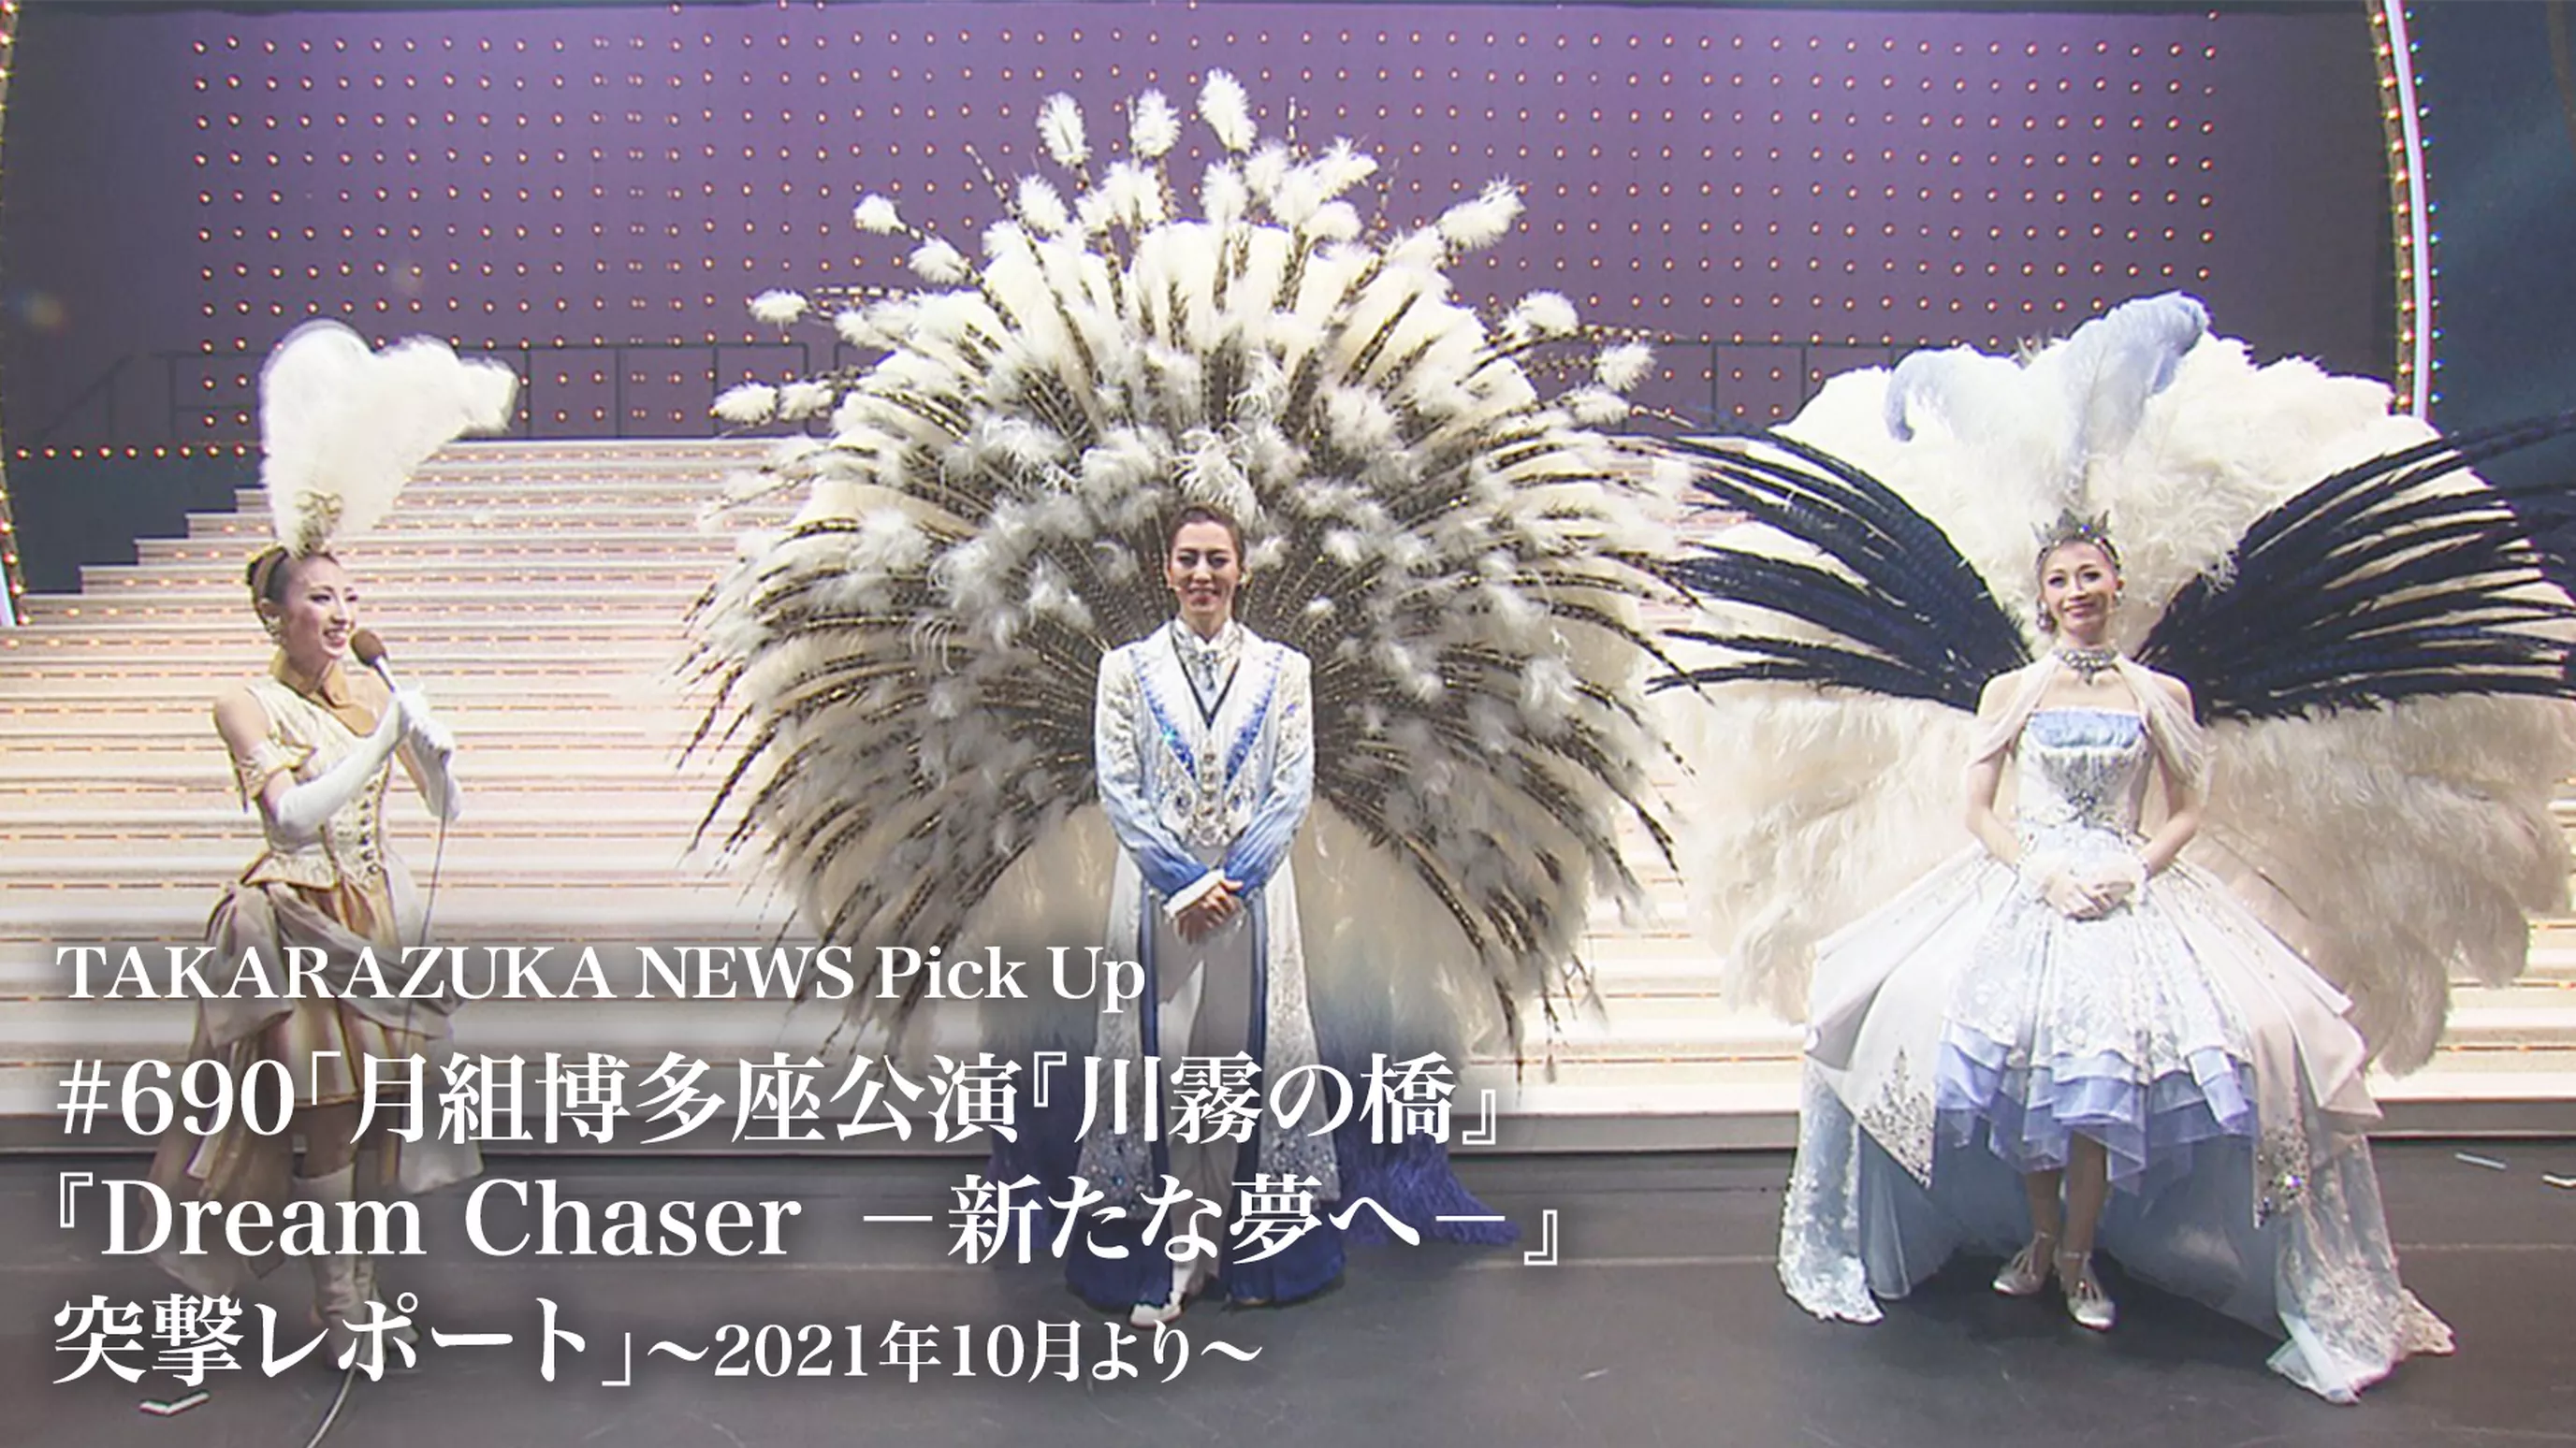 TAKARAZUKA NEWS Pick Up #690「月組博多座公演『川霧の橋』『Dream Chaser　－新たな夢へ－』突撃レポート」～2021年10月より～